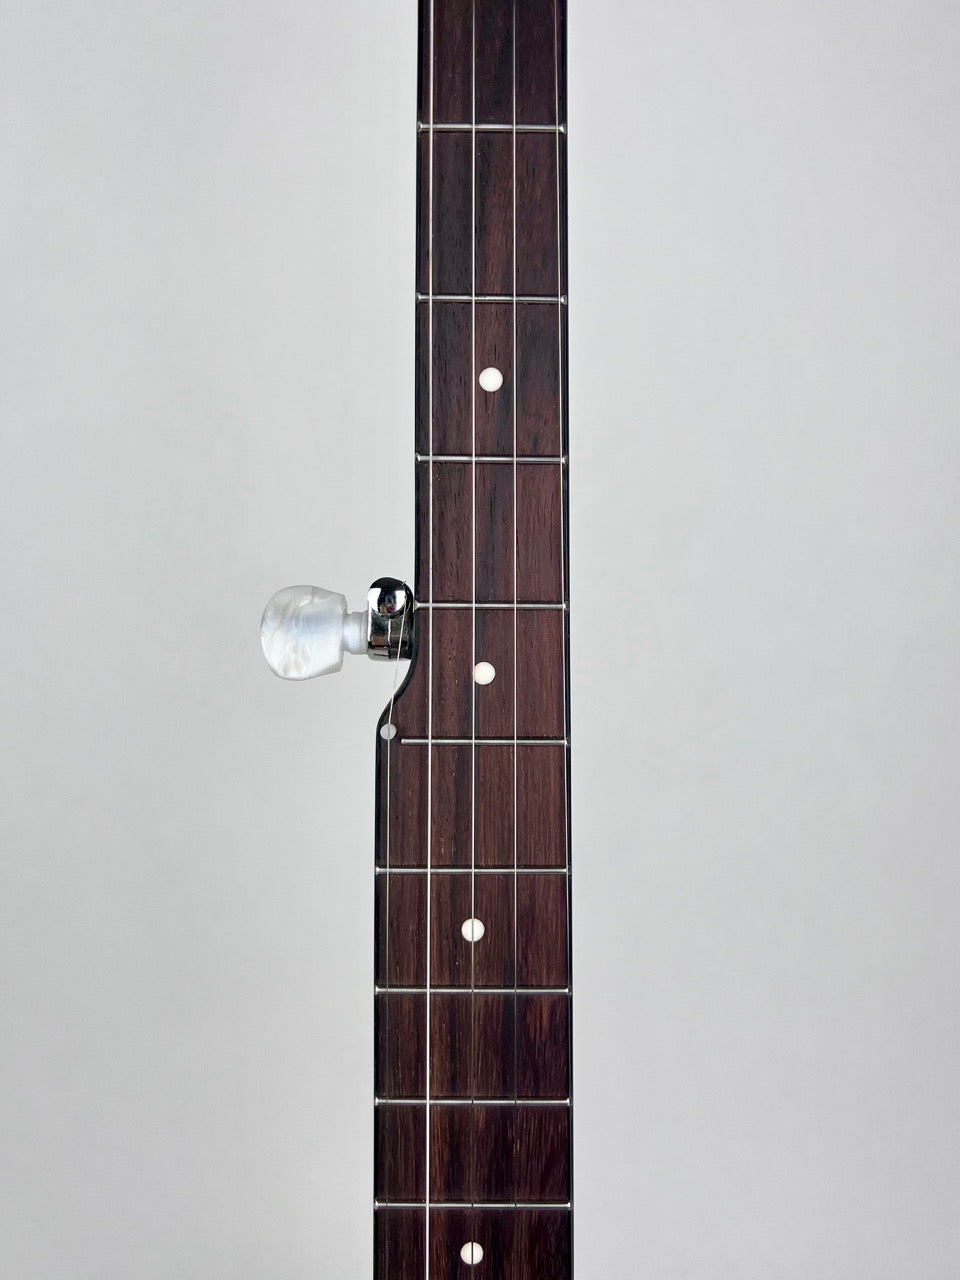 Gold Tone CC-50 Banjo